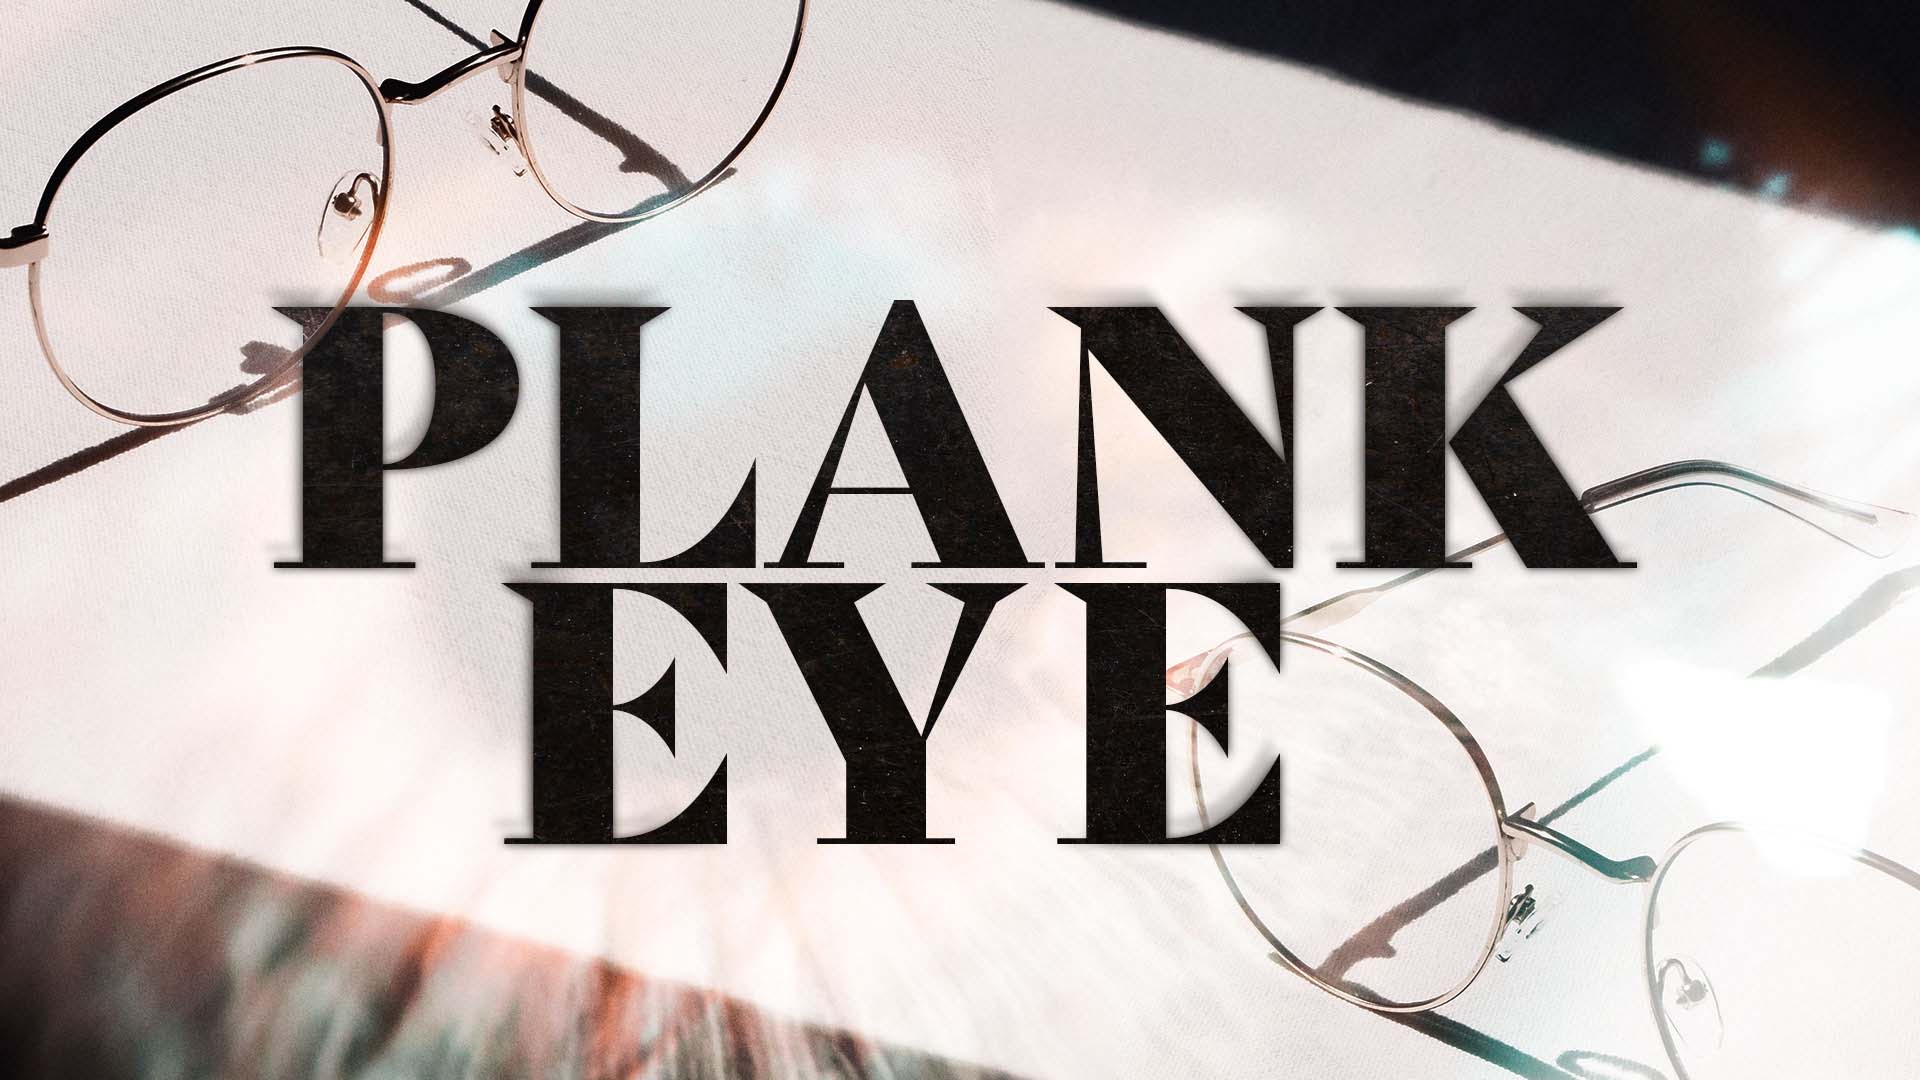 Plank Eye